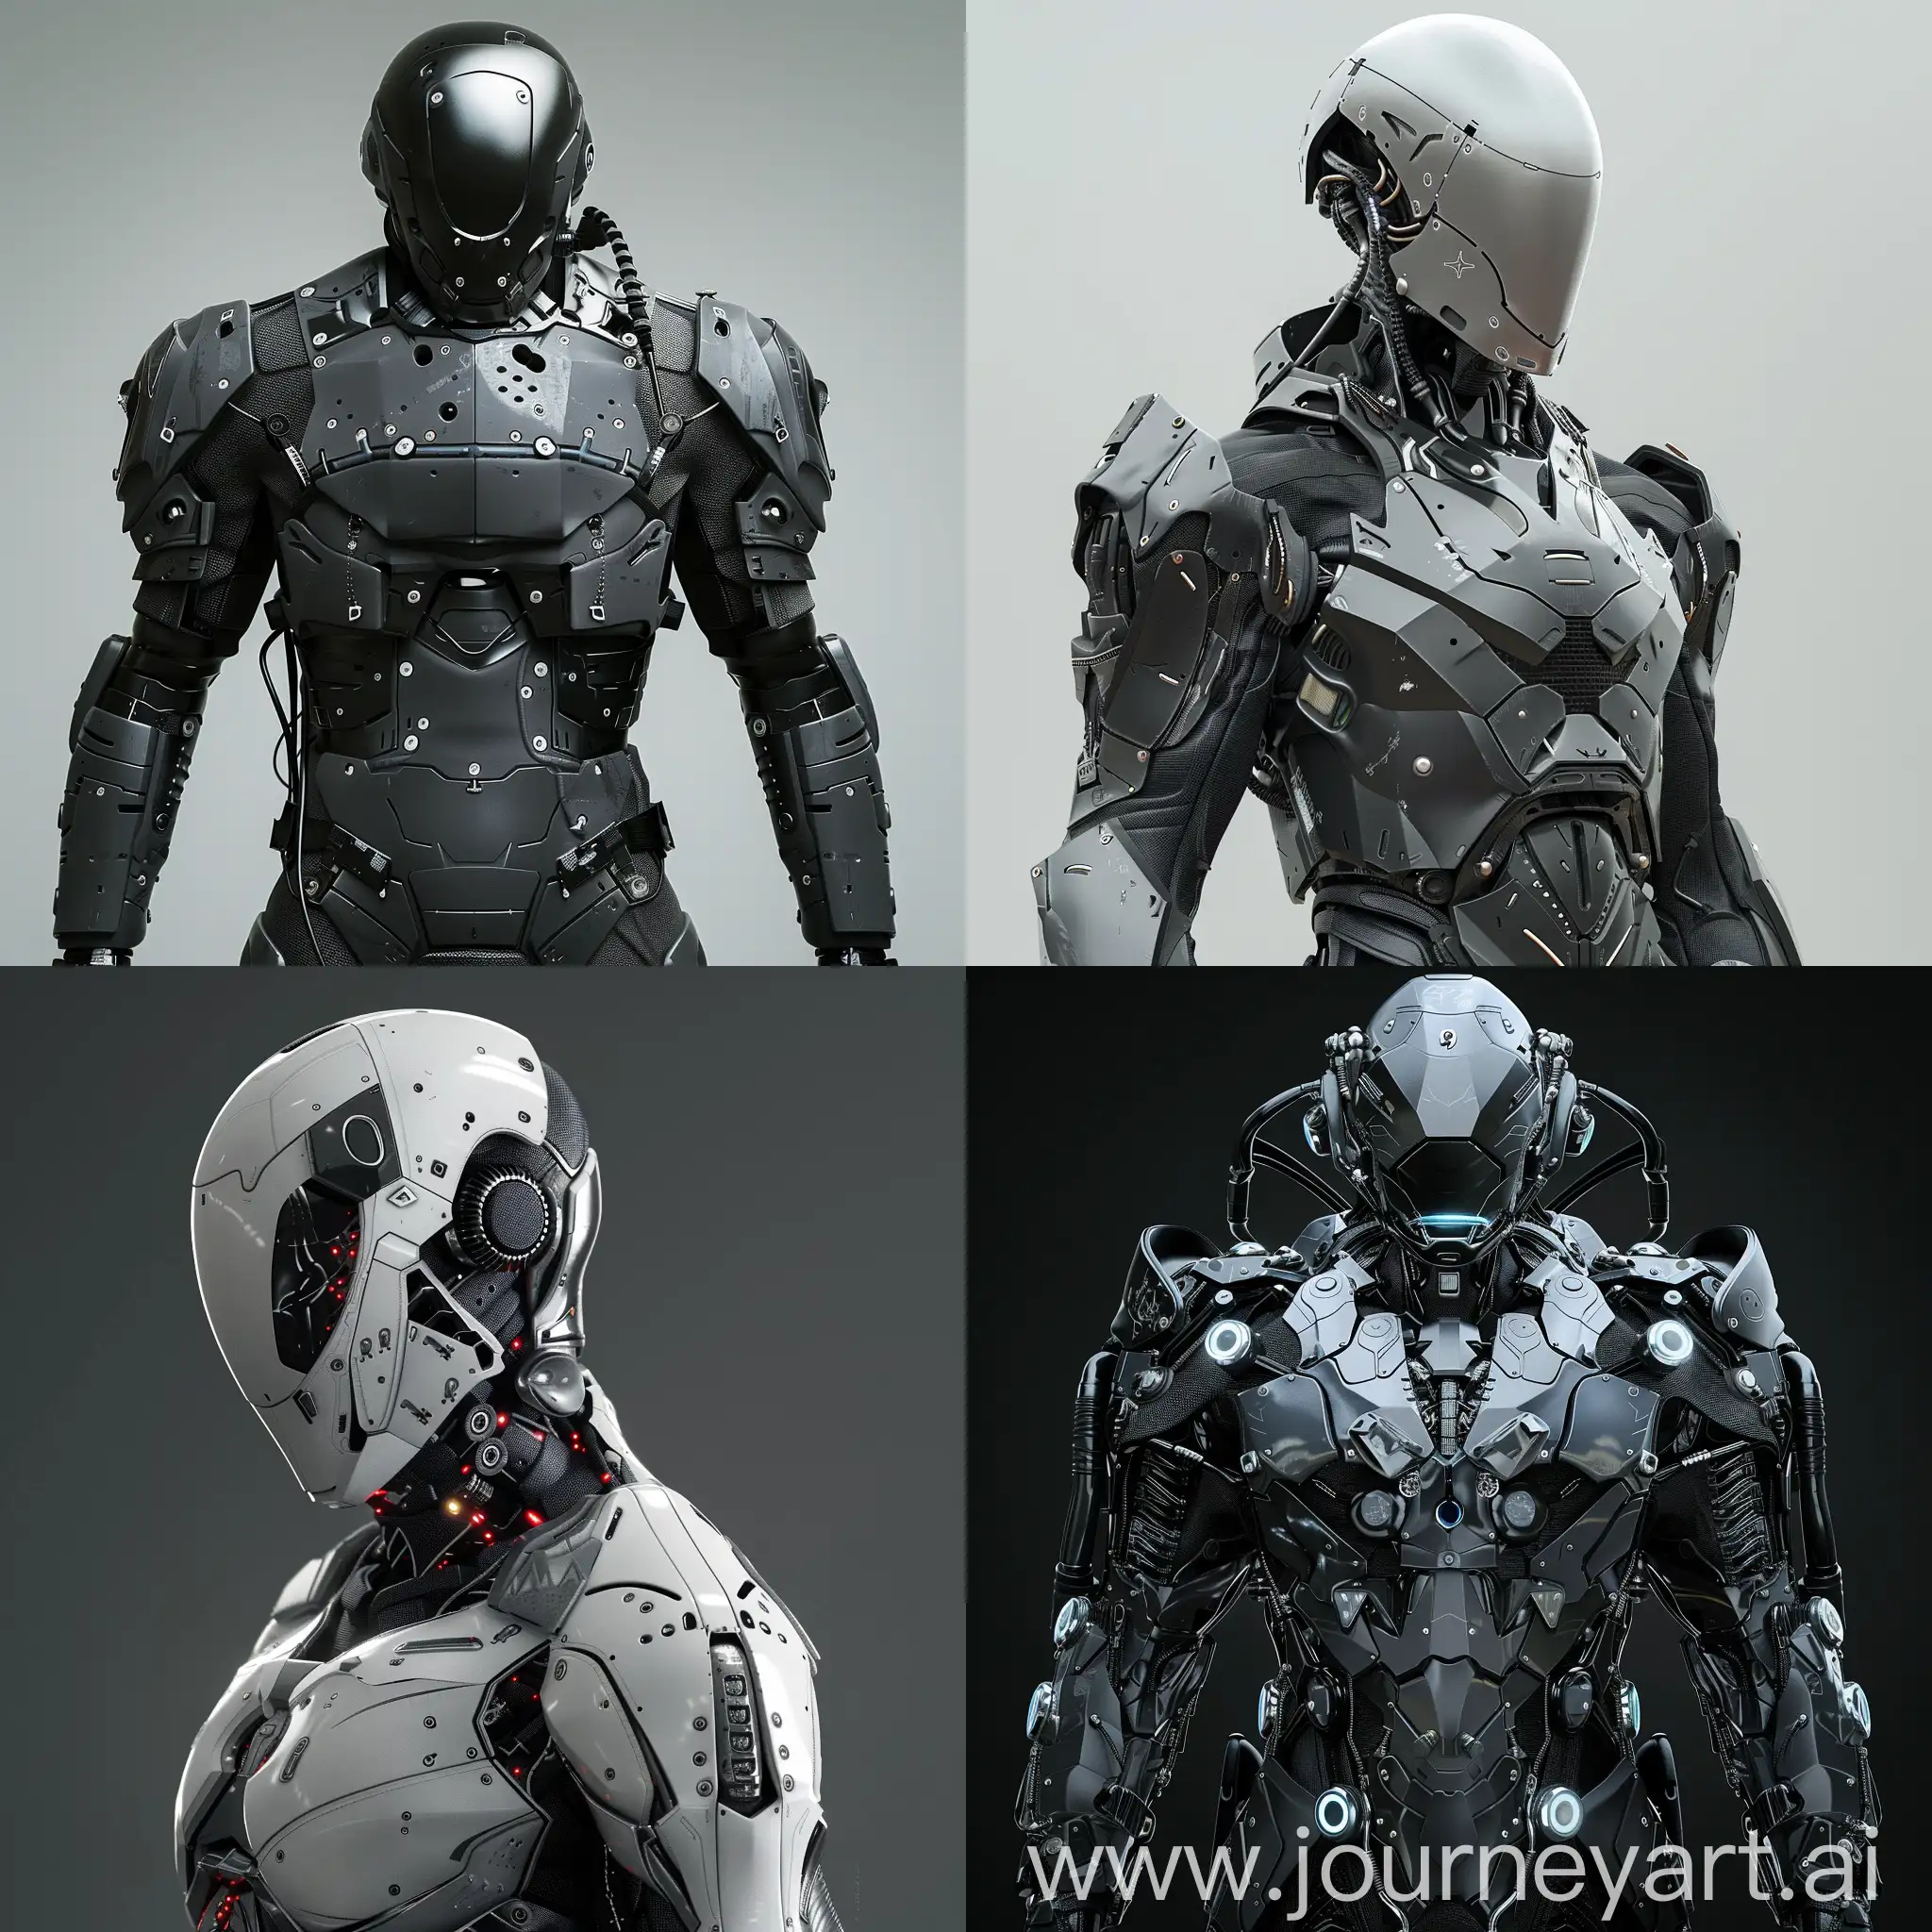 SciFi-Armor-Controlled-by-Mind-Futuristic-Battle-Suit-Technology-Concept